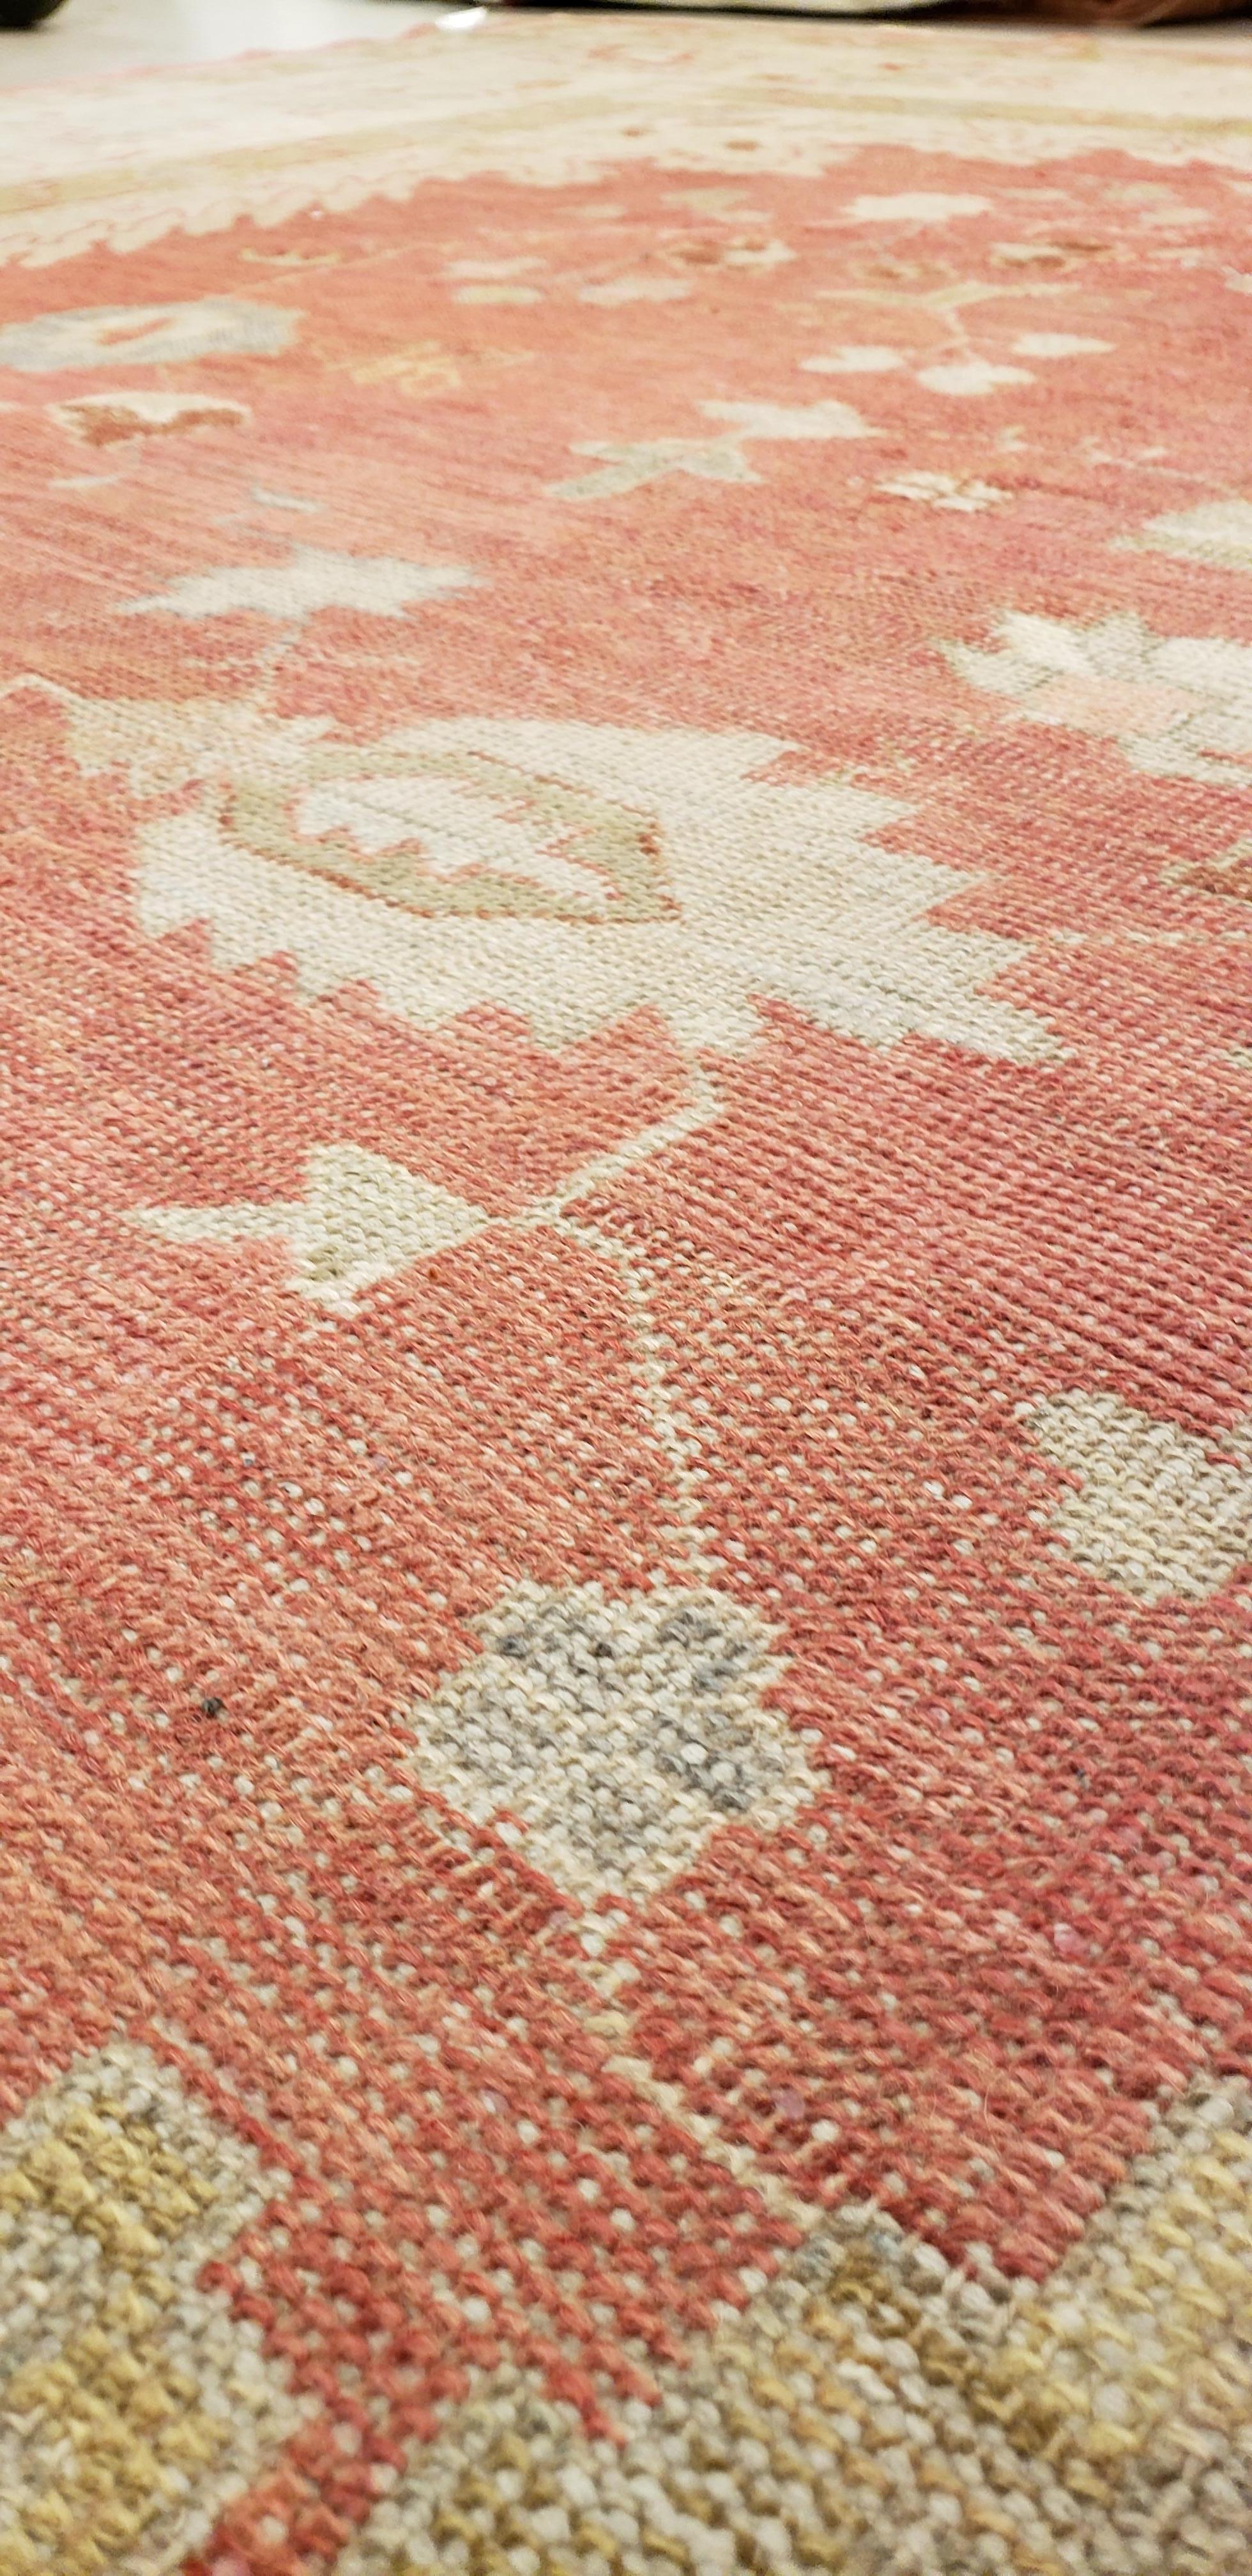 Antique Oushak Carpet, Handmade Turkish Oriental Rug, Beige, Coral, Soft Colors For Sale 8